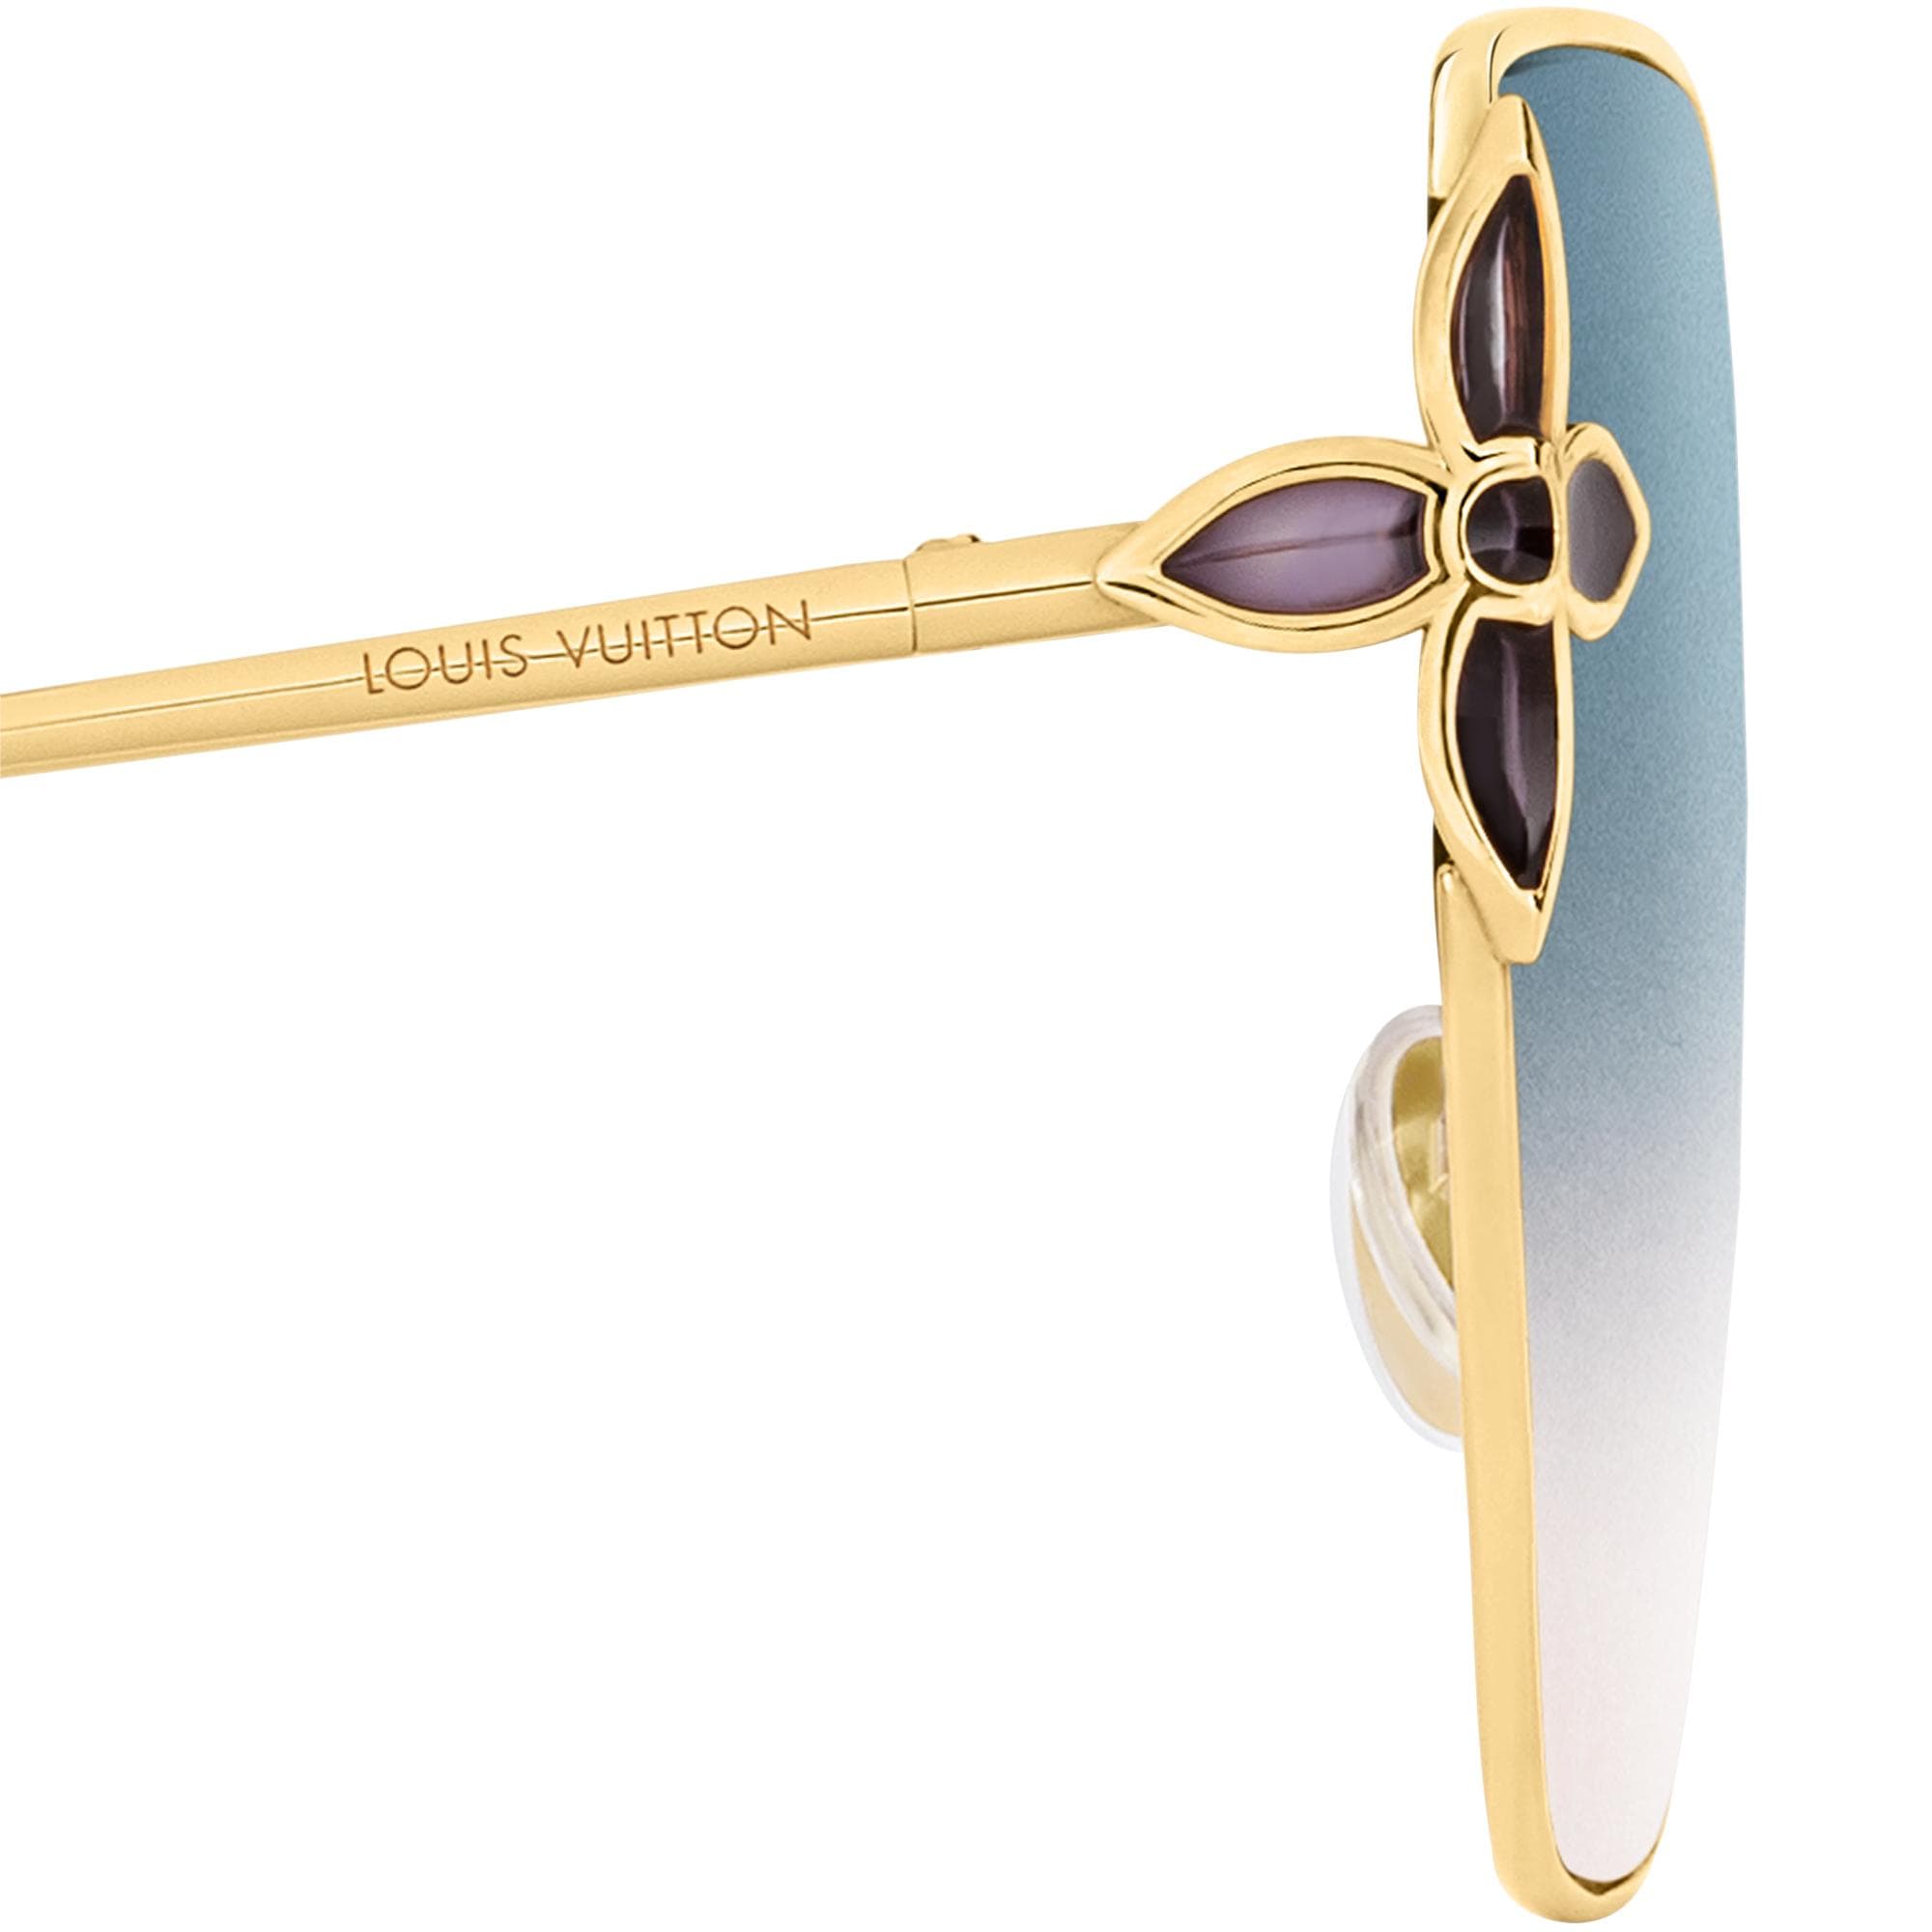 Louis Vuitton MONOGRAM The lv pilot anti-blue light glasses (Z1634U)